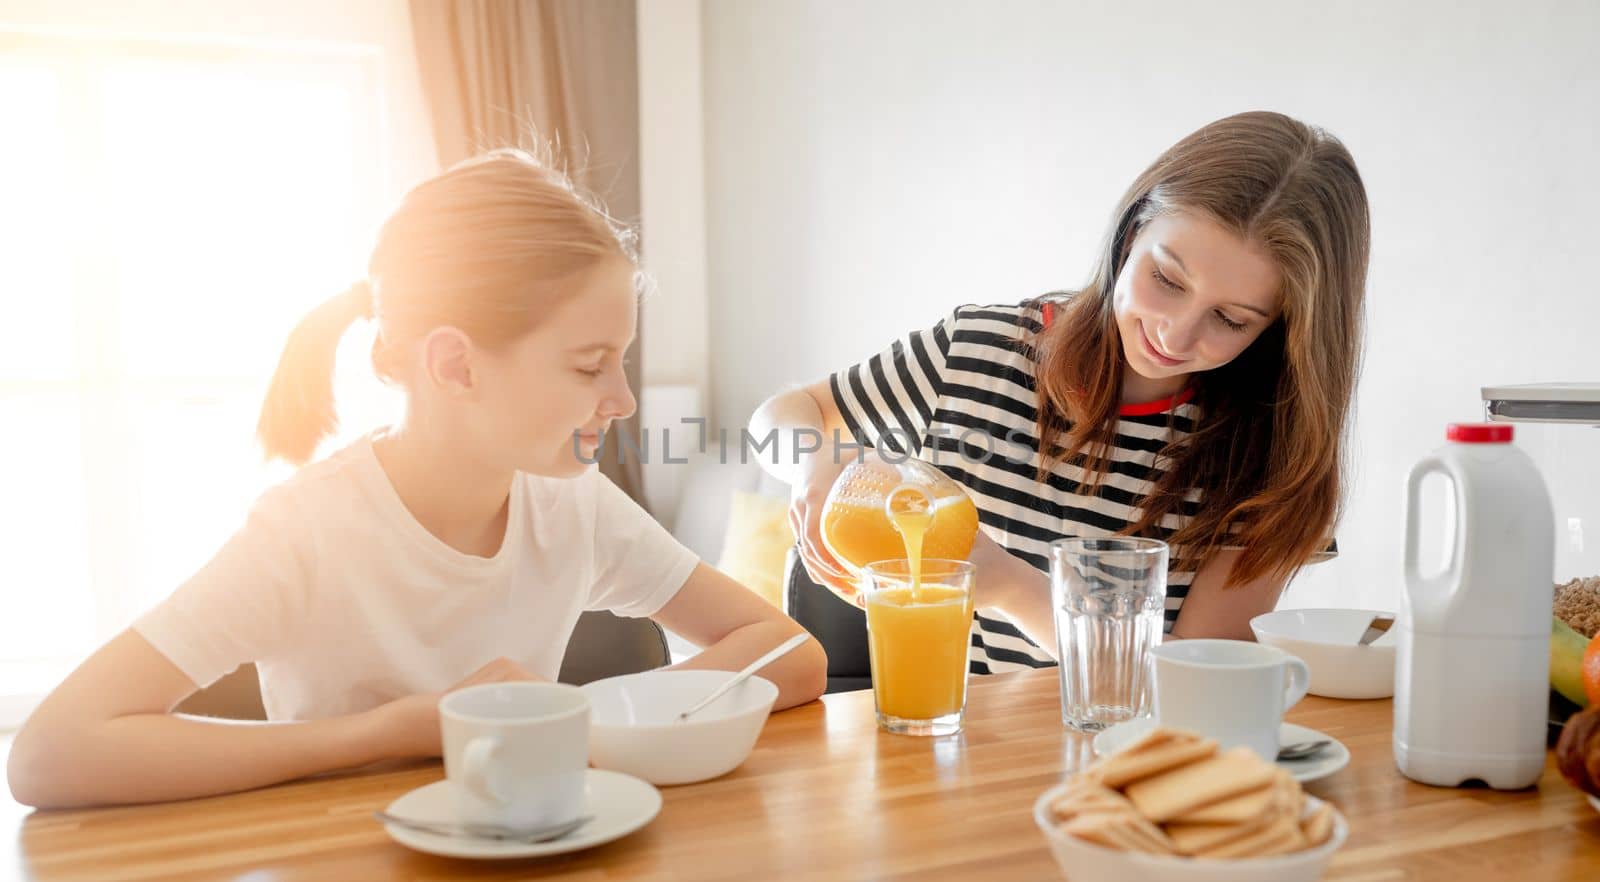 Girls sisters eat tasty breakfast together by tan4ikk1